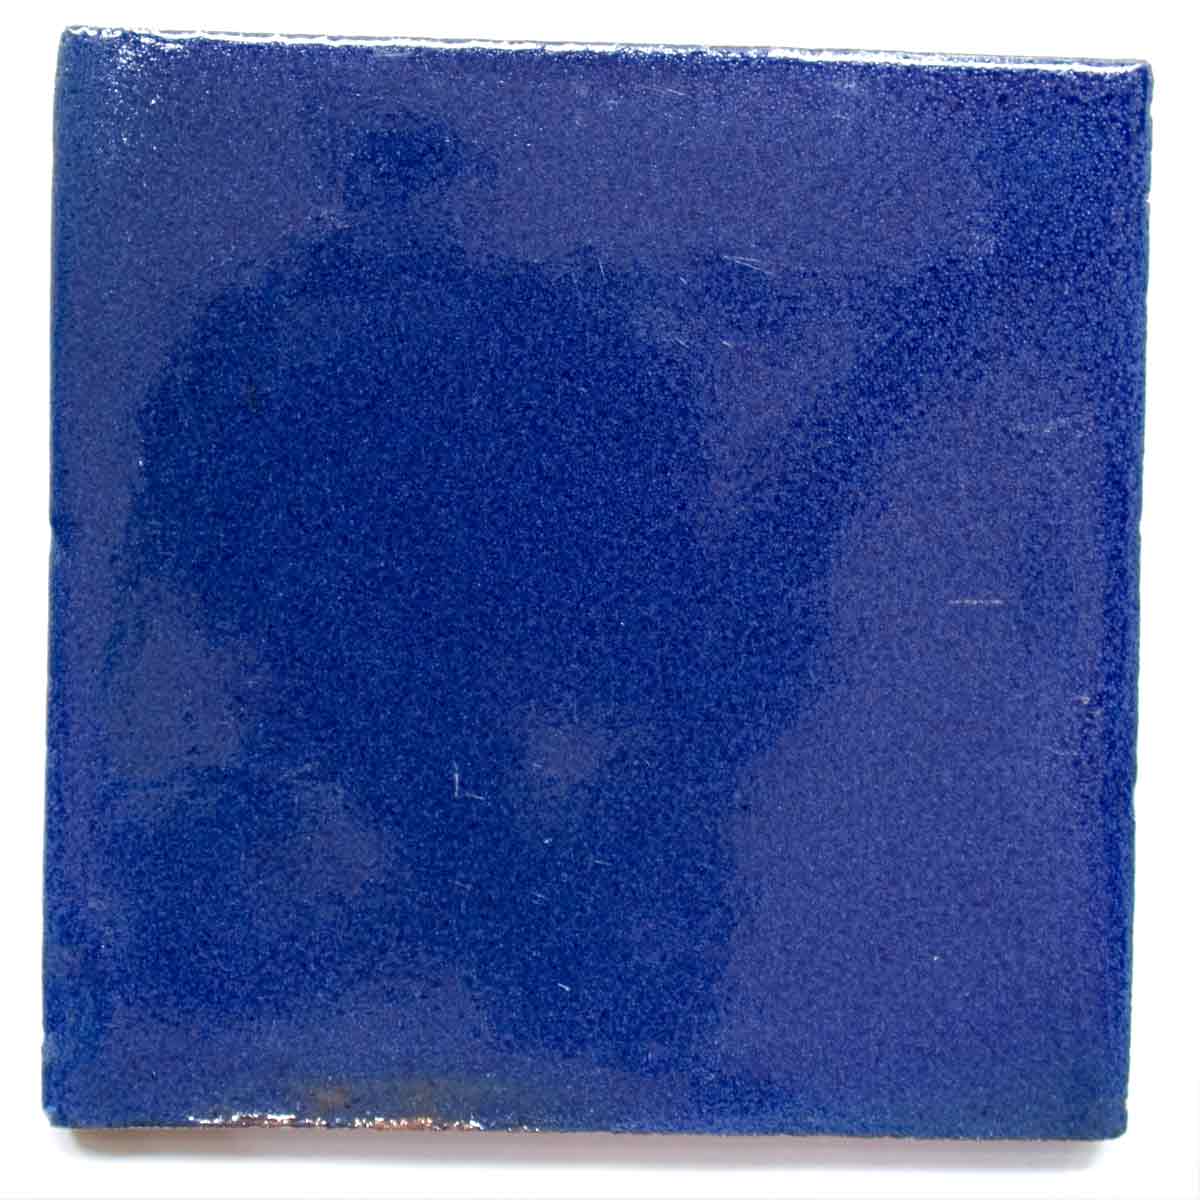 Cobalt blue 10.5 x 10.5cm